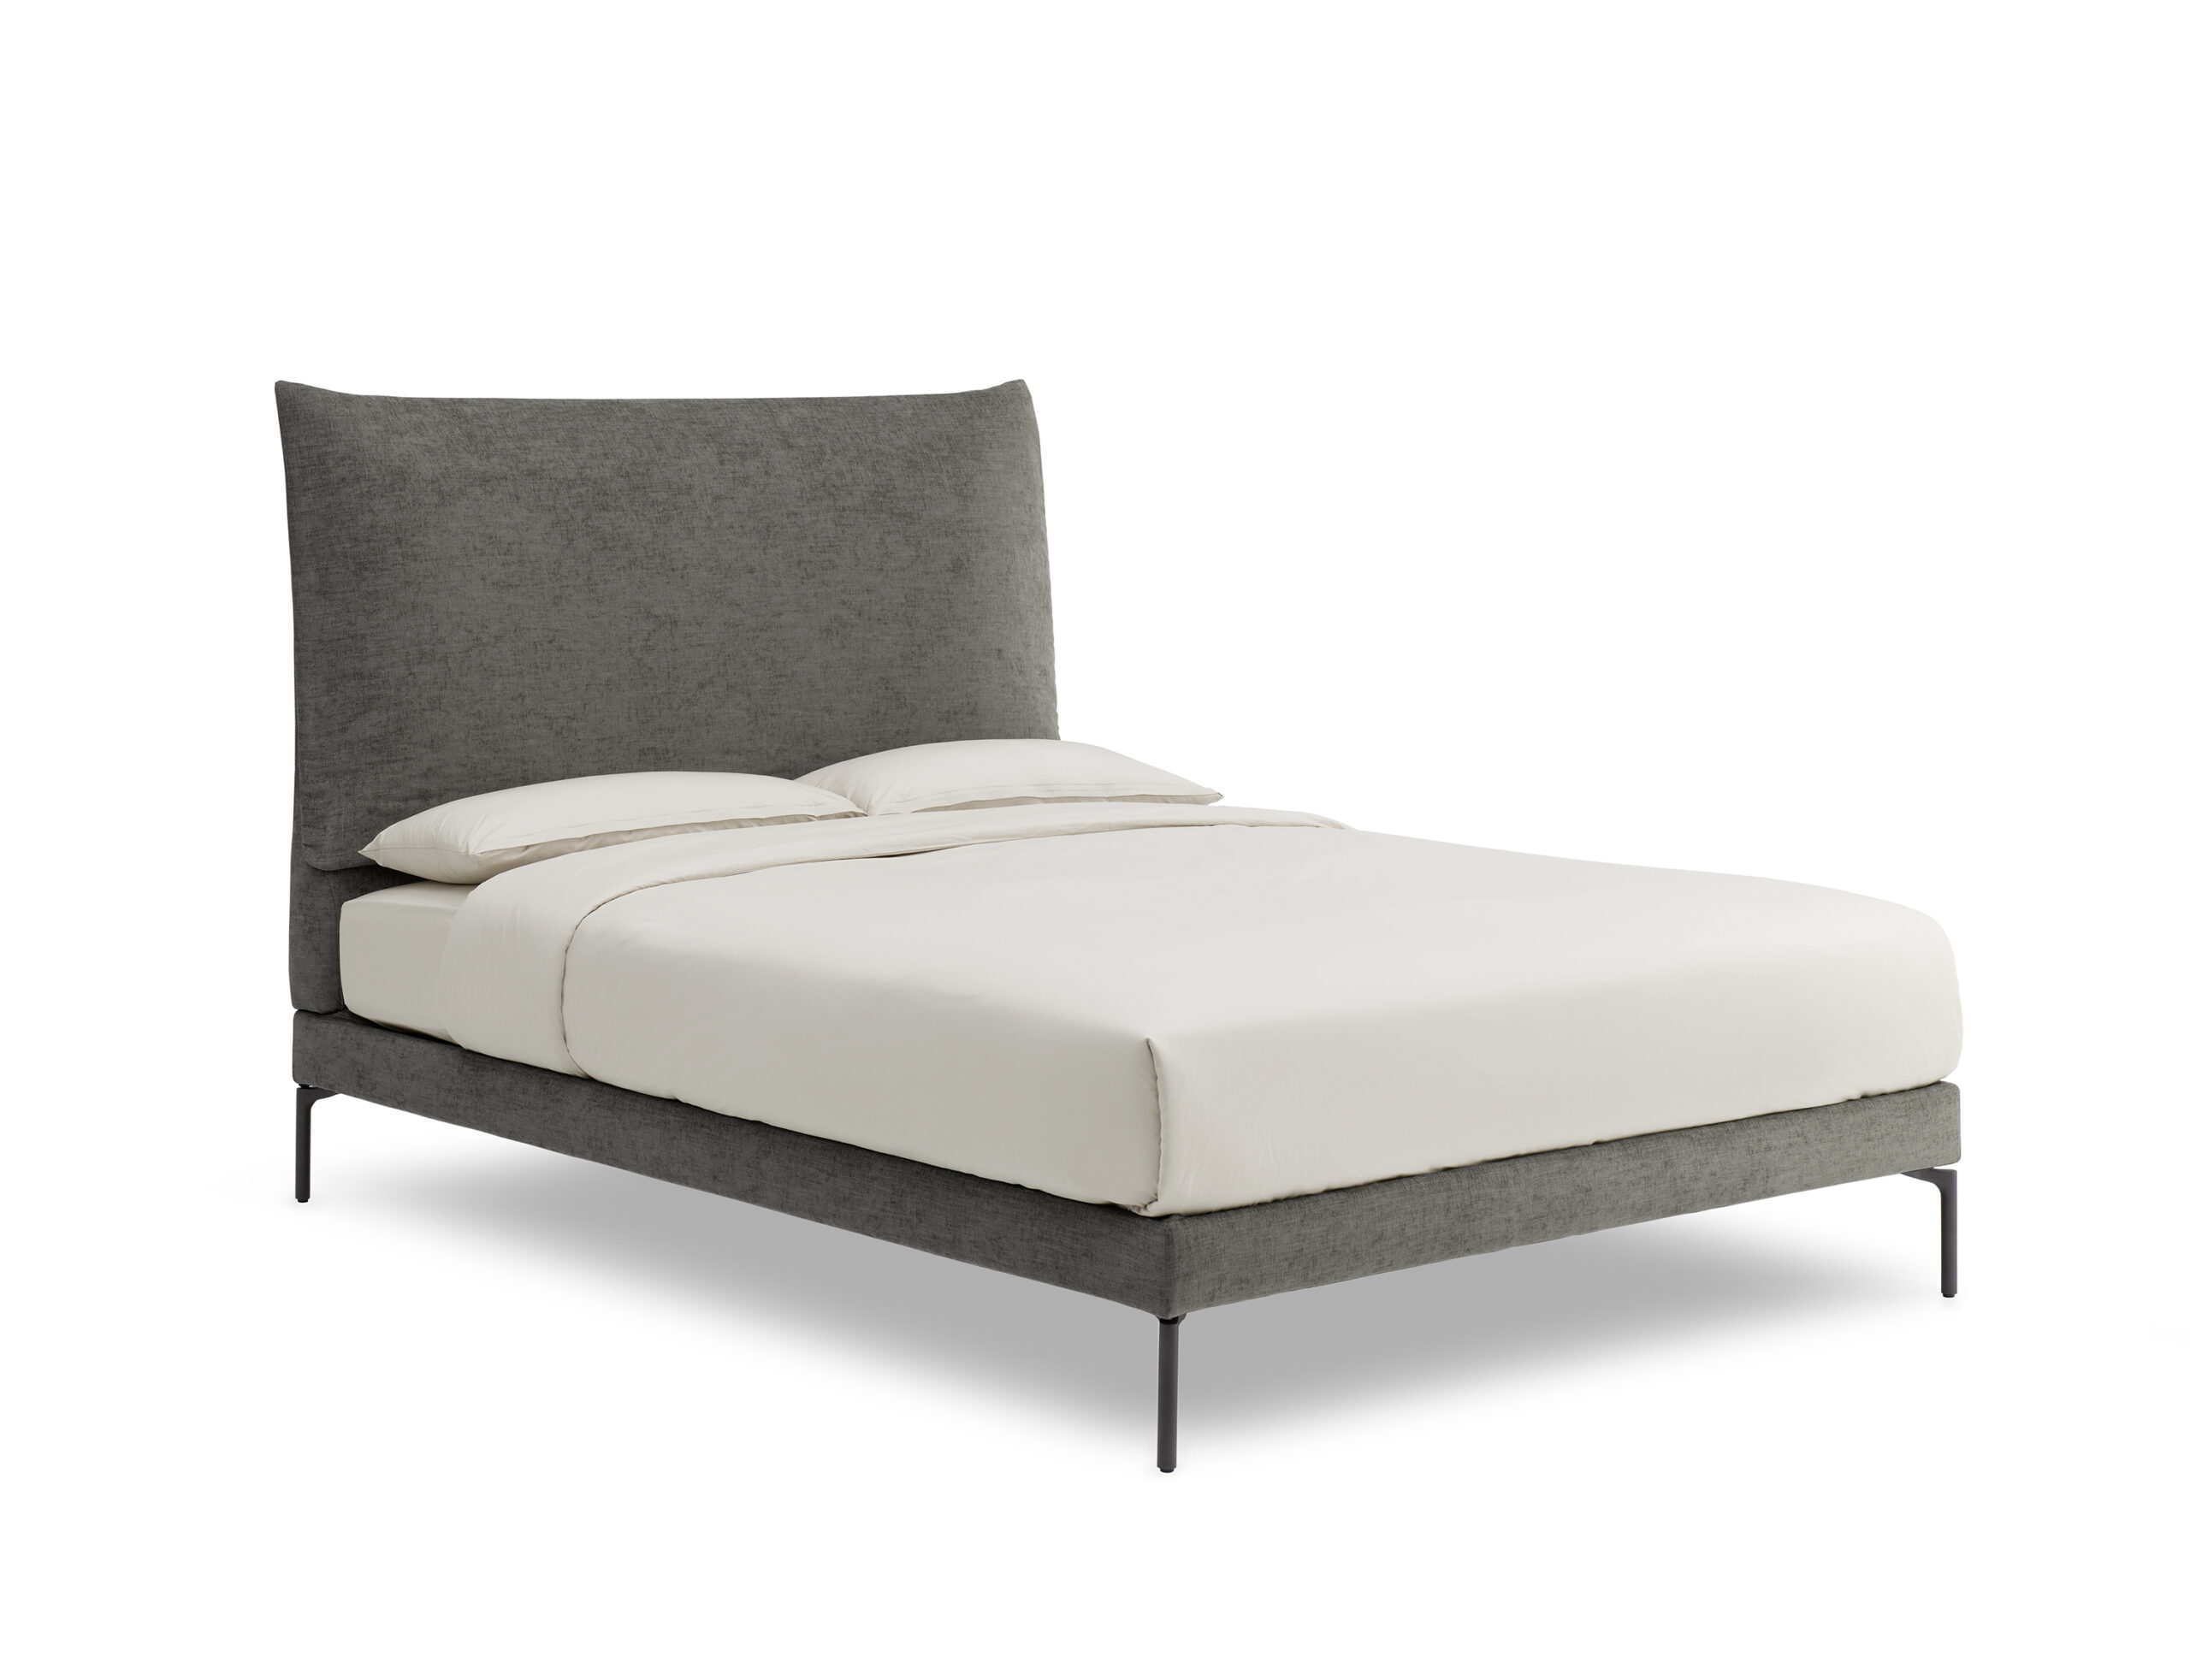 Arco bed designed by Debiasi Sandri for Schramm